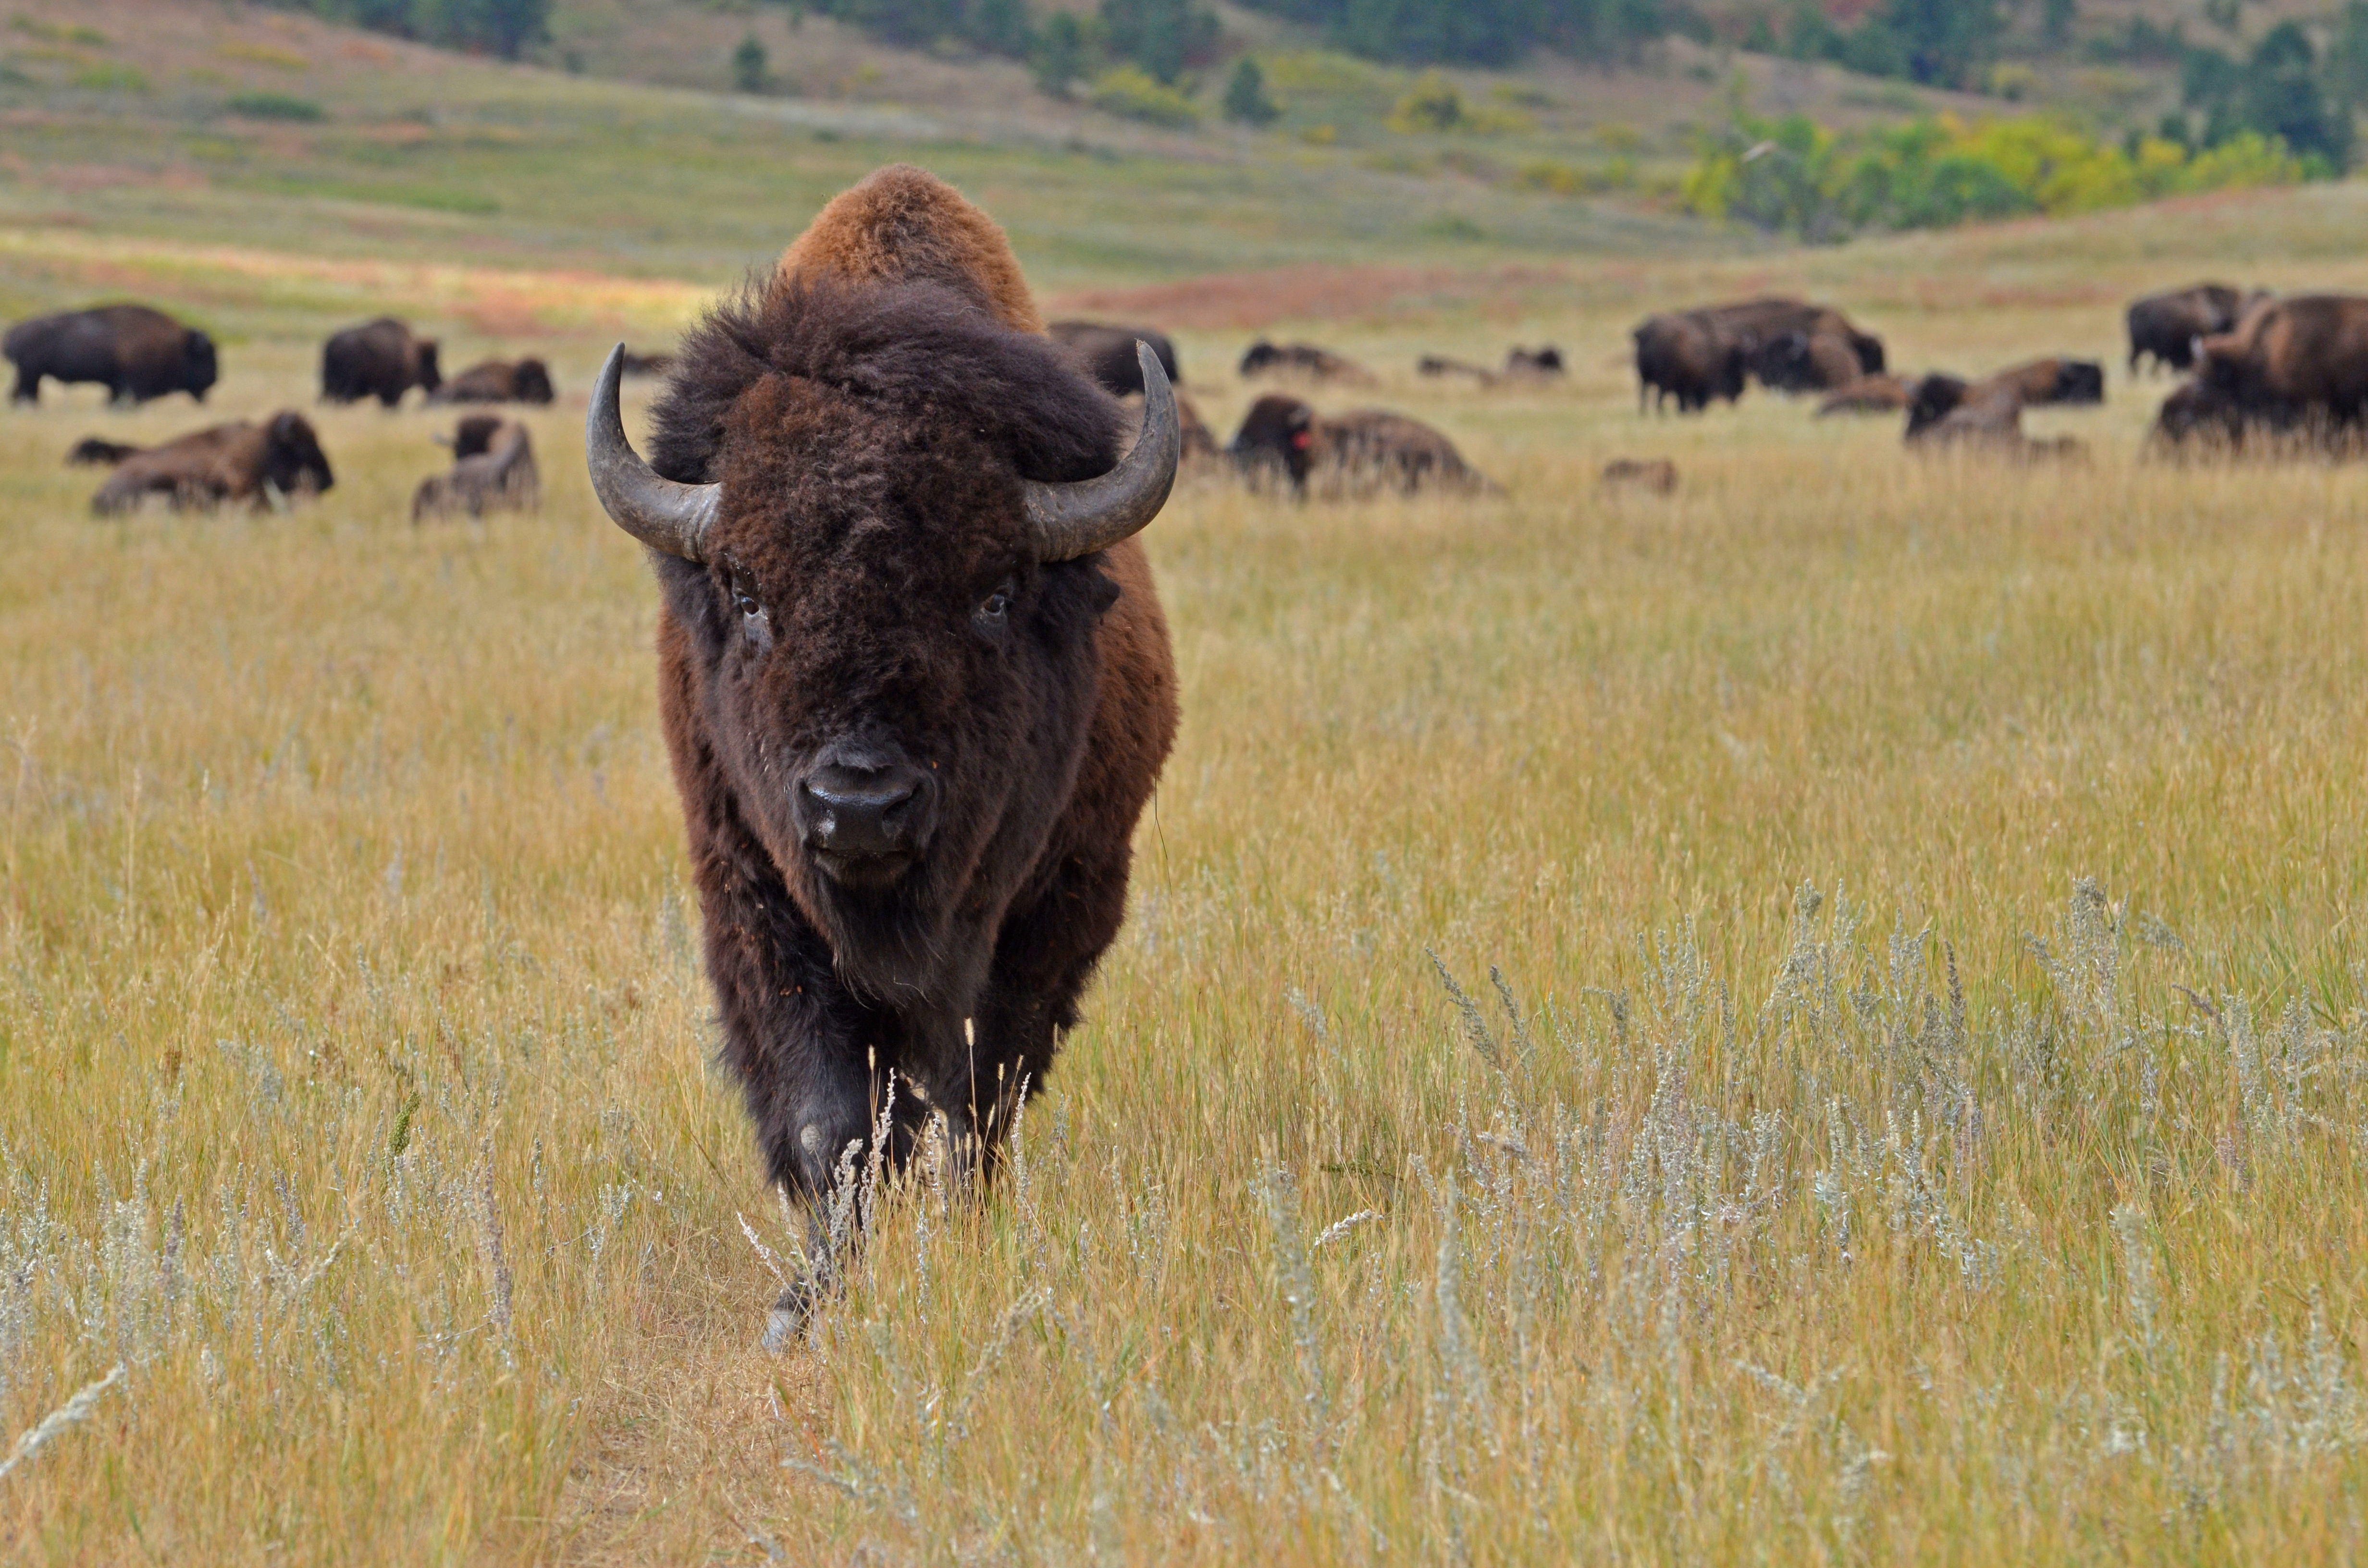 Local wildlife. Custer State Park. Buffalo Park. Common Buffalo Habitat. Животные на территории Южной Дакоты фото.